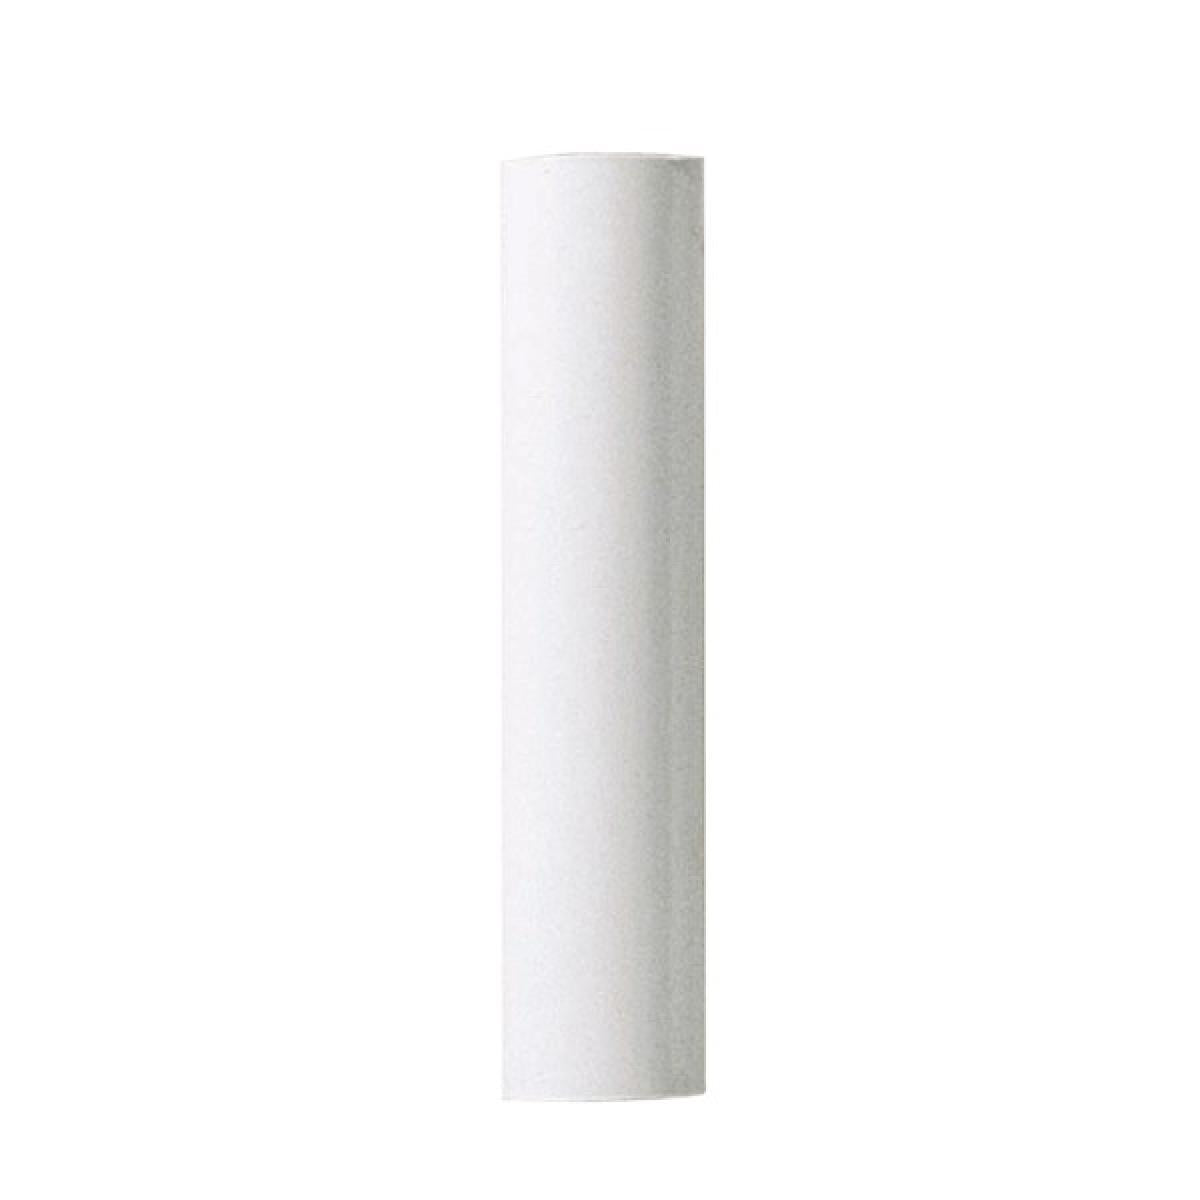 Satco 90-917 Plastic Candle Cover White Plastic 1-3/16" Inside Diameter 1-1/4" Outside Diameter 24" Height